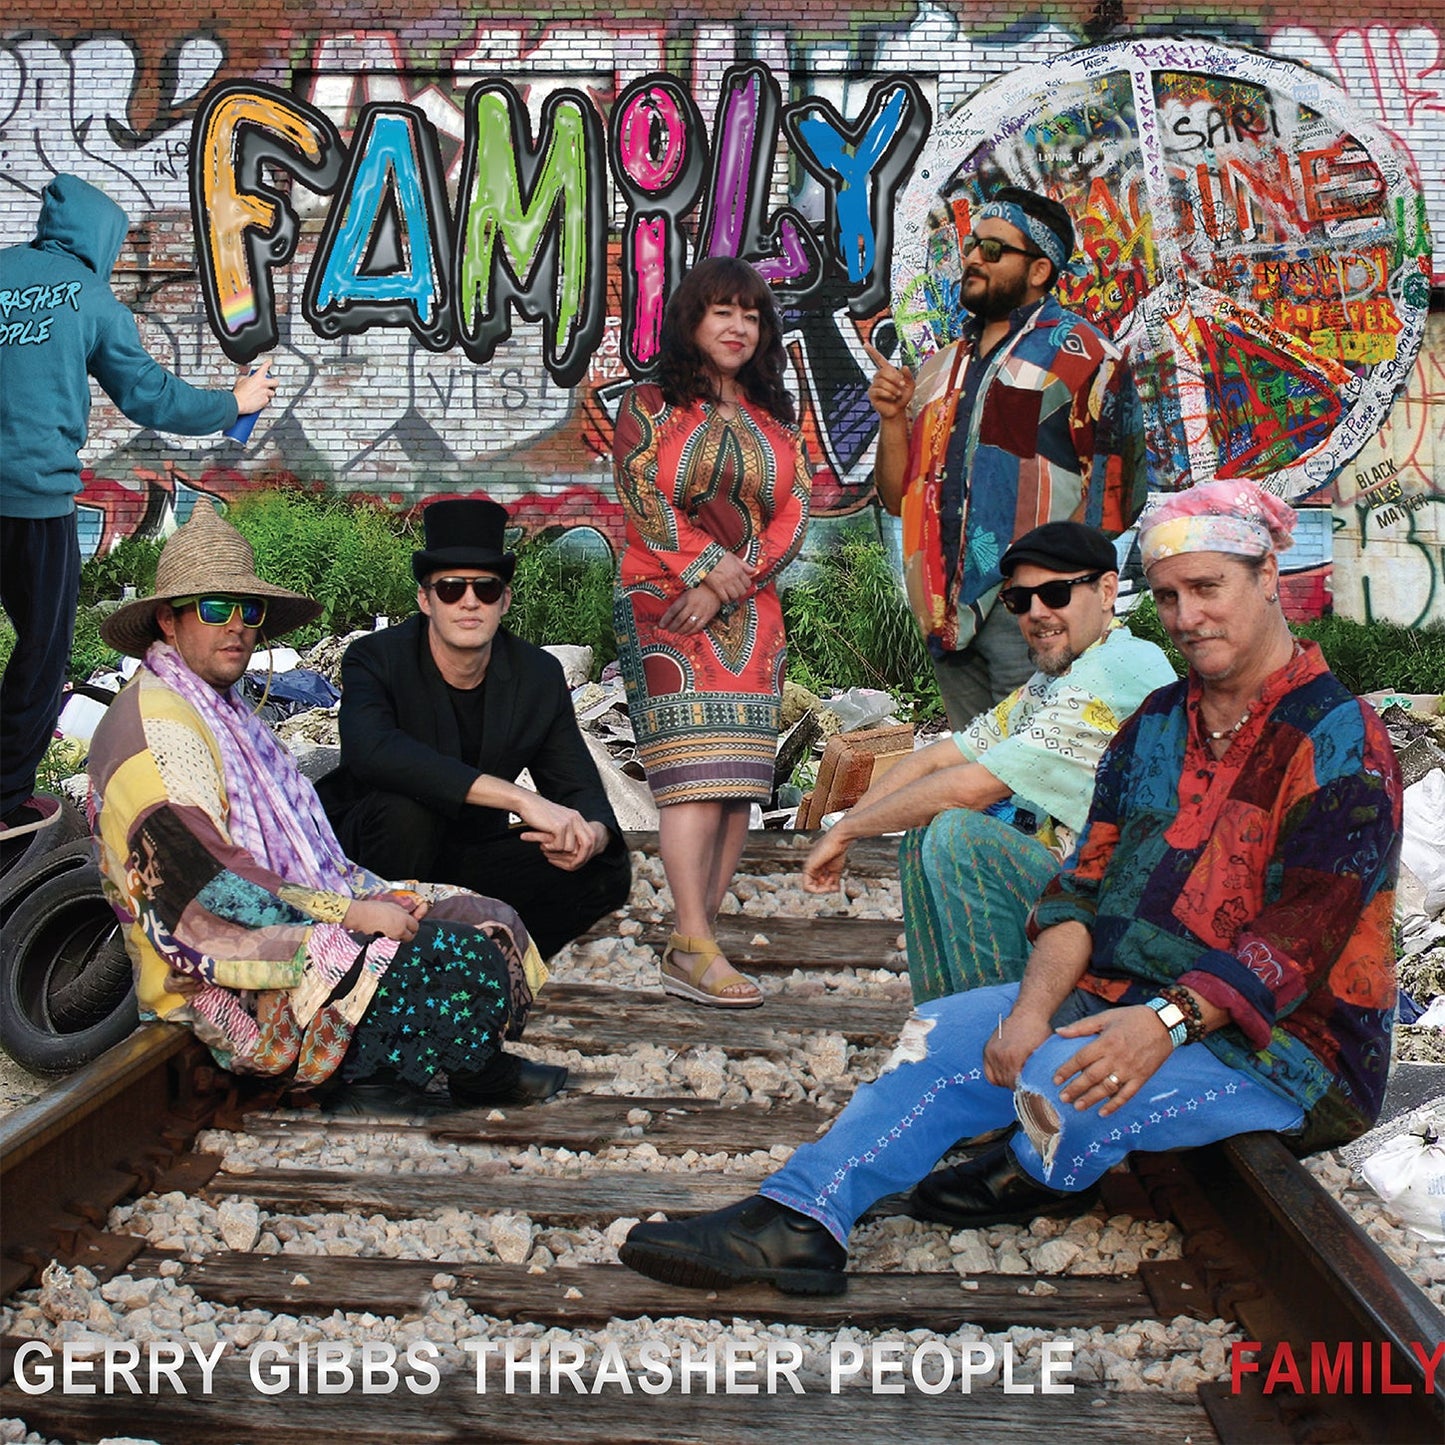 Gerry Gibbs Thrasher People: Family